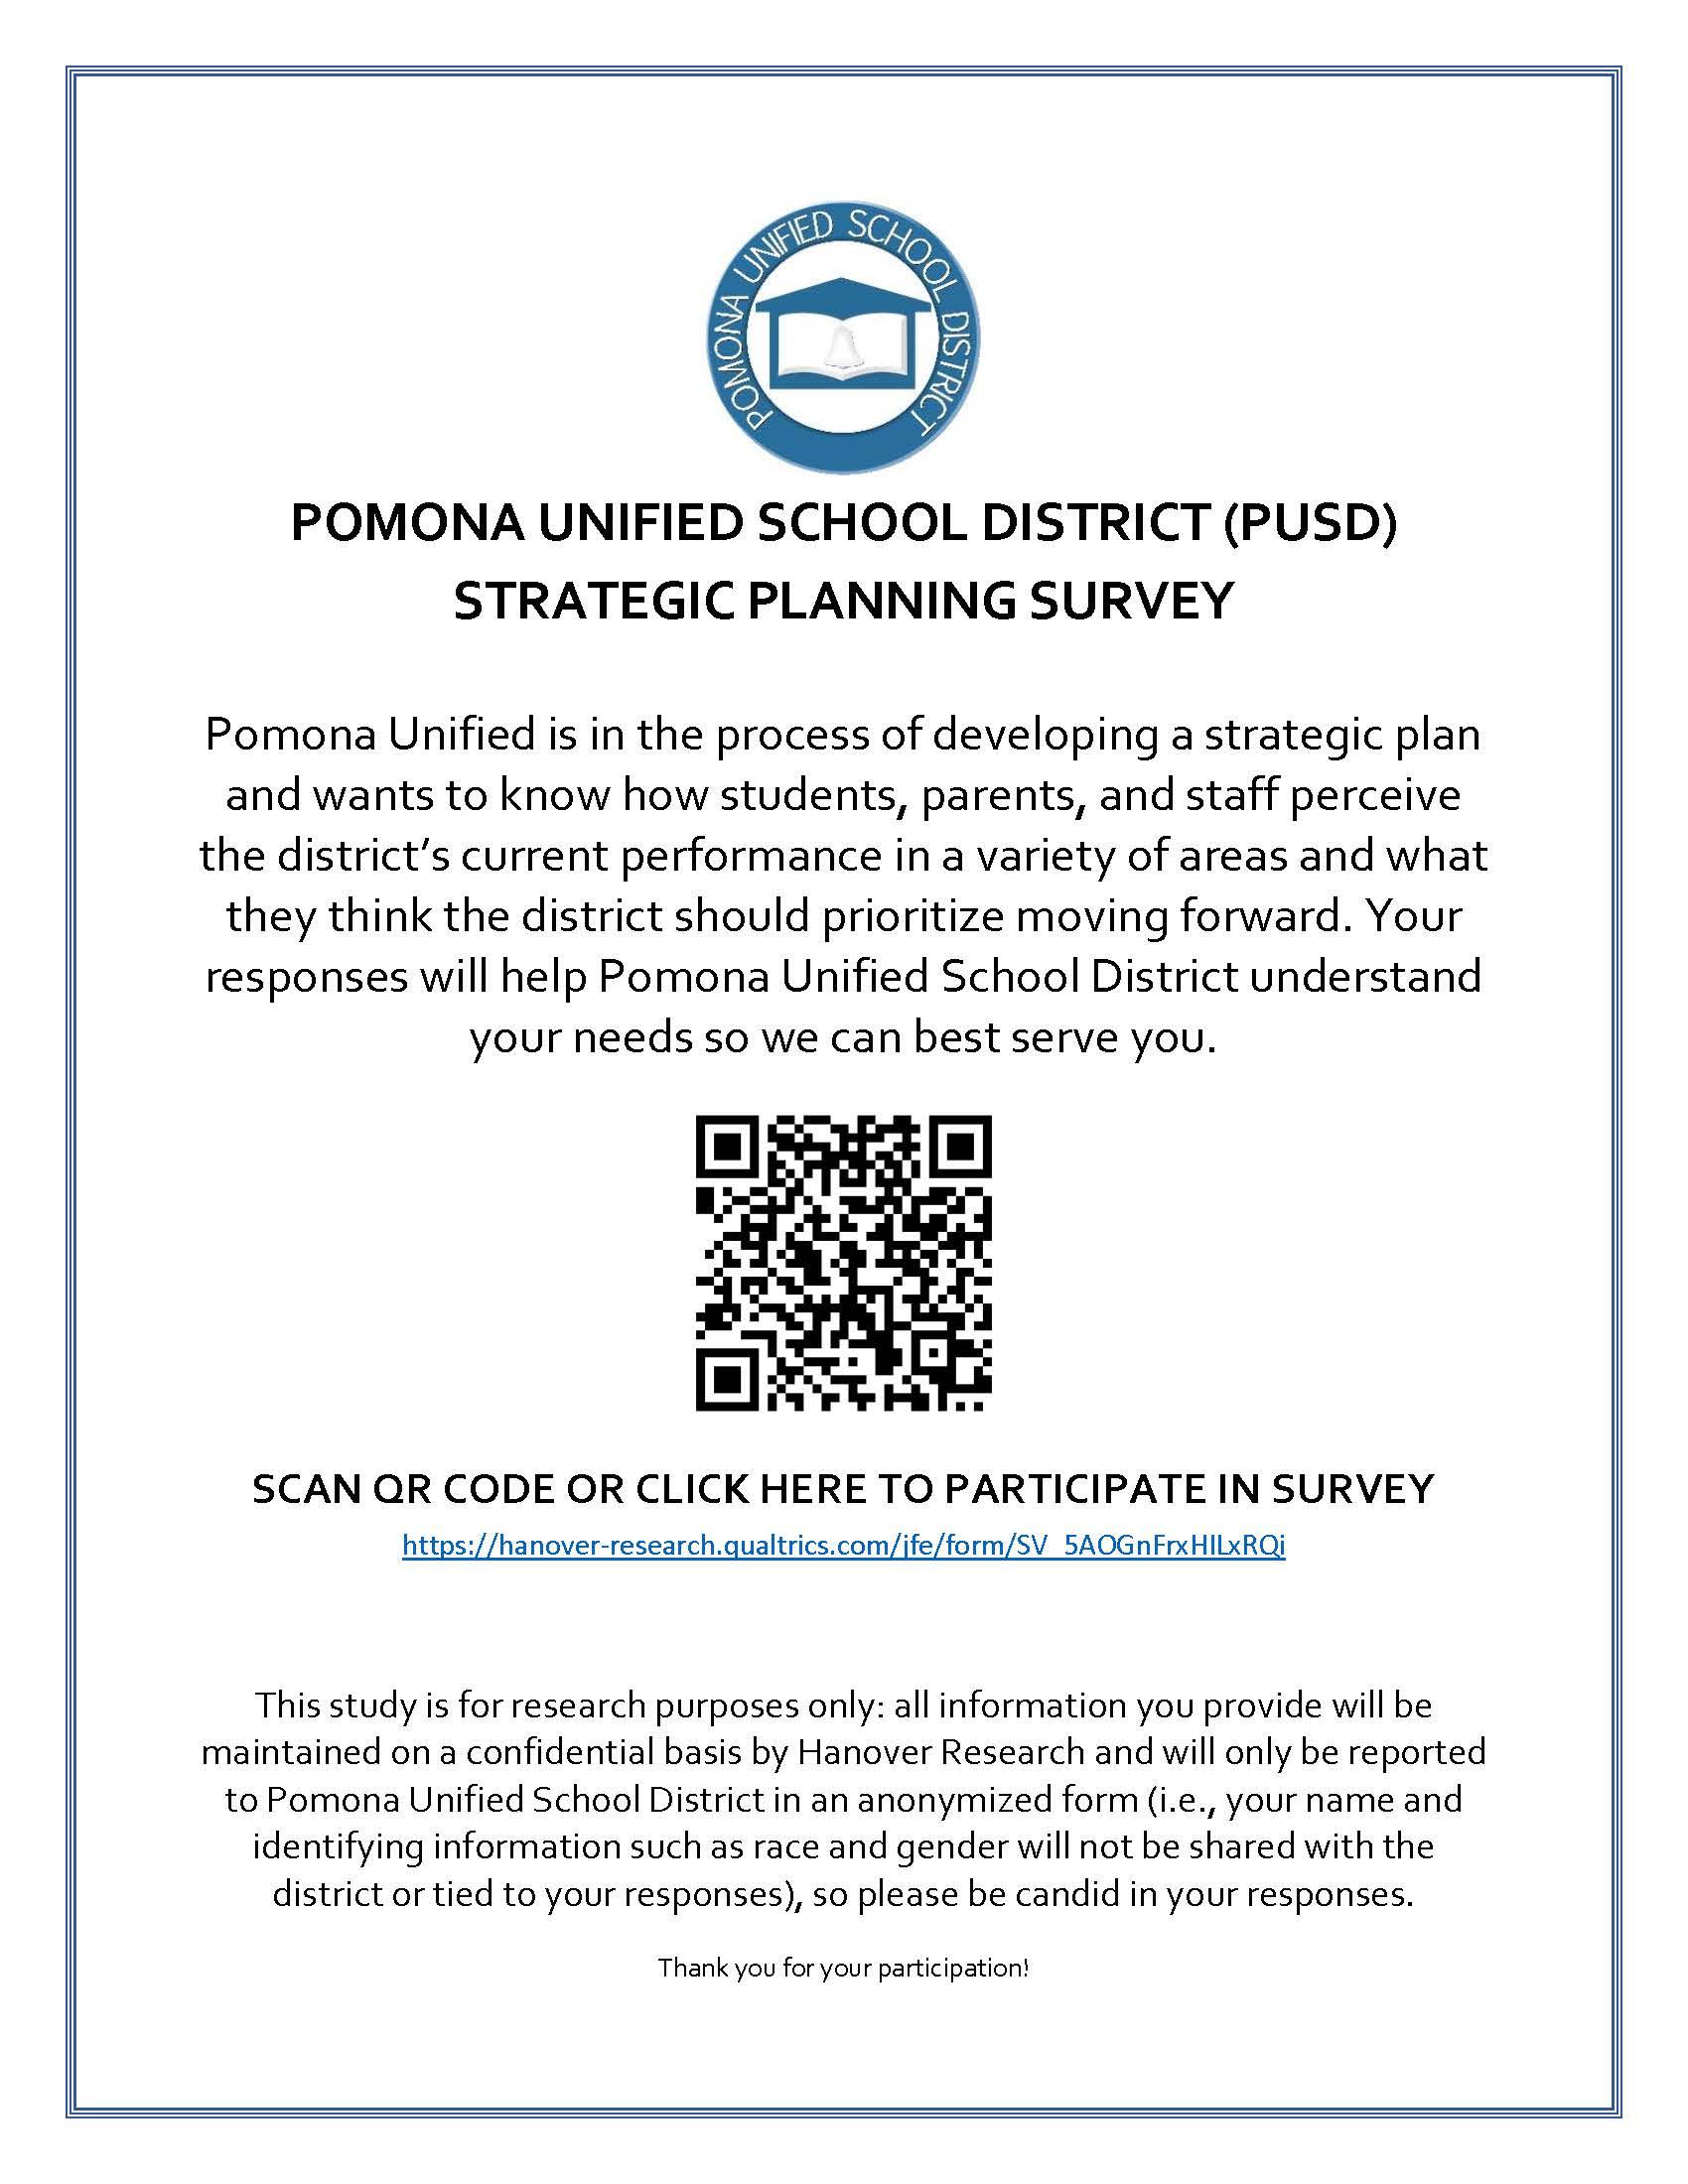 PUSD Strategic Planning Survey 